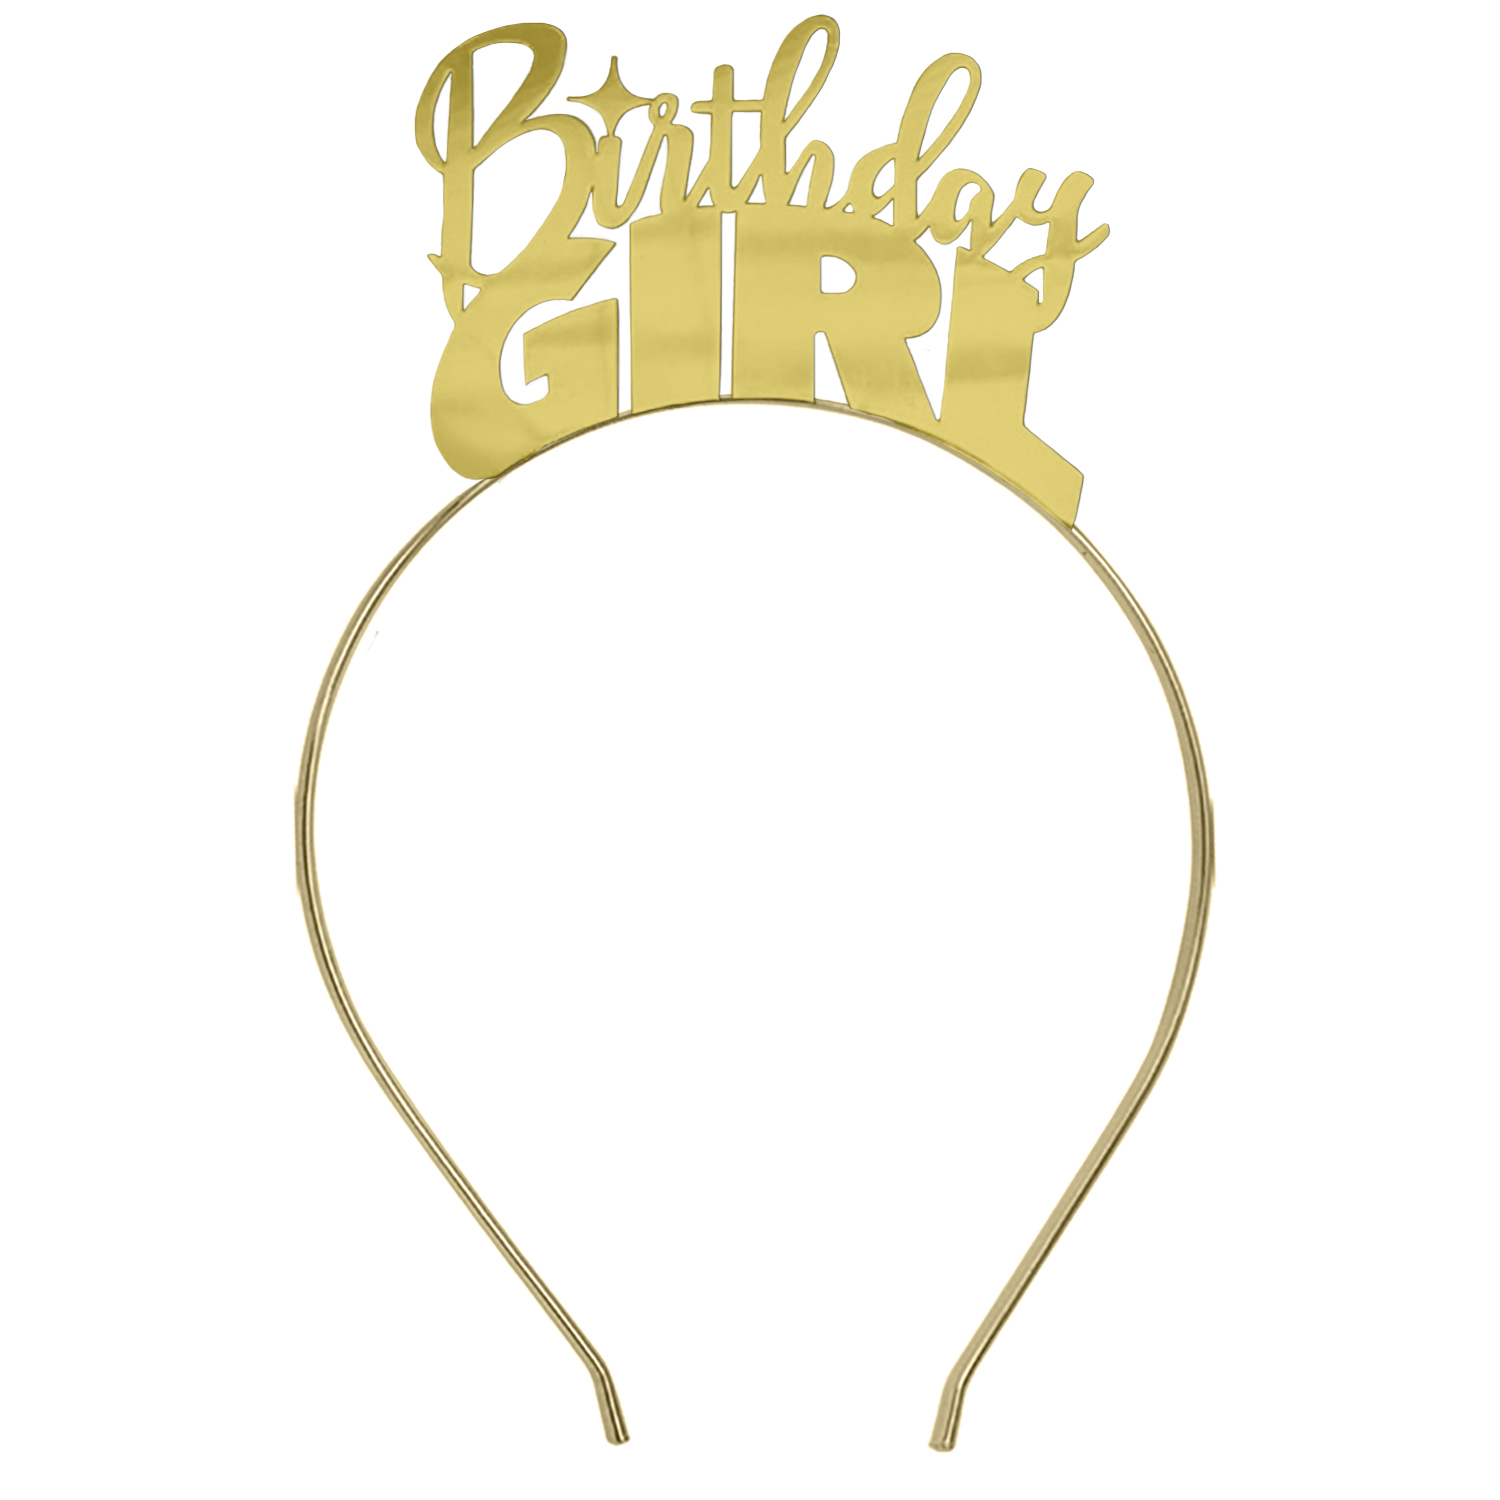 Birthday Girl Gold Headband - Birthday Party Supplies, Birthday Ideas, Birthday Party, Birthday Tiara, Birthday Girl, Finally 21 - image 1 of 2